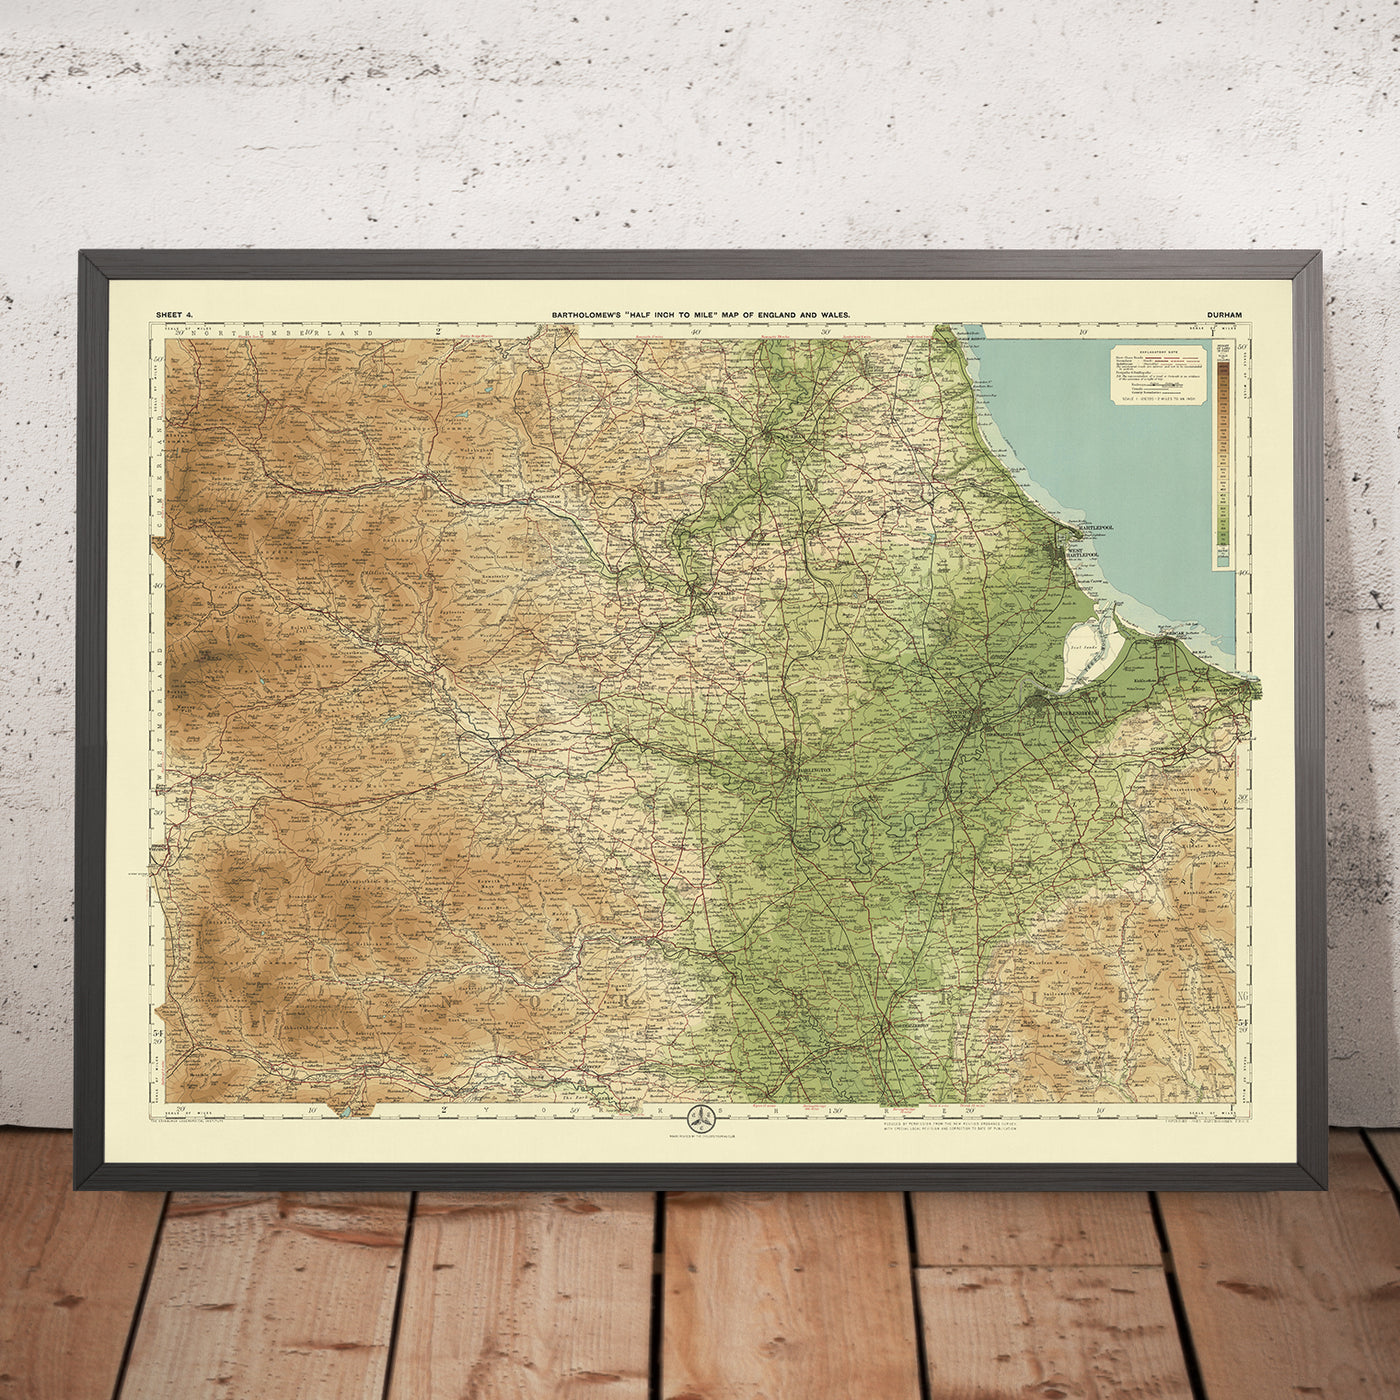 Old OS Map of County Durham by Bartholomew, 1901: Middlesbrough, River Tees, Pennine Hills, Darlington, Hartlepool